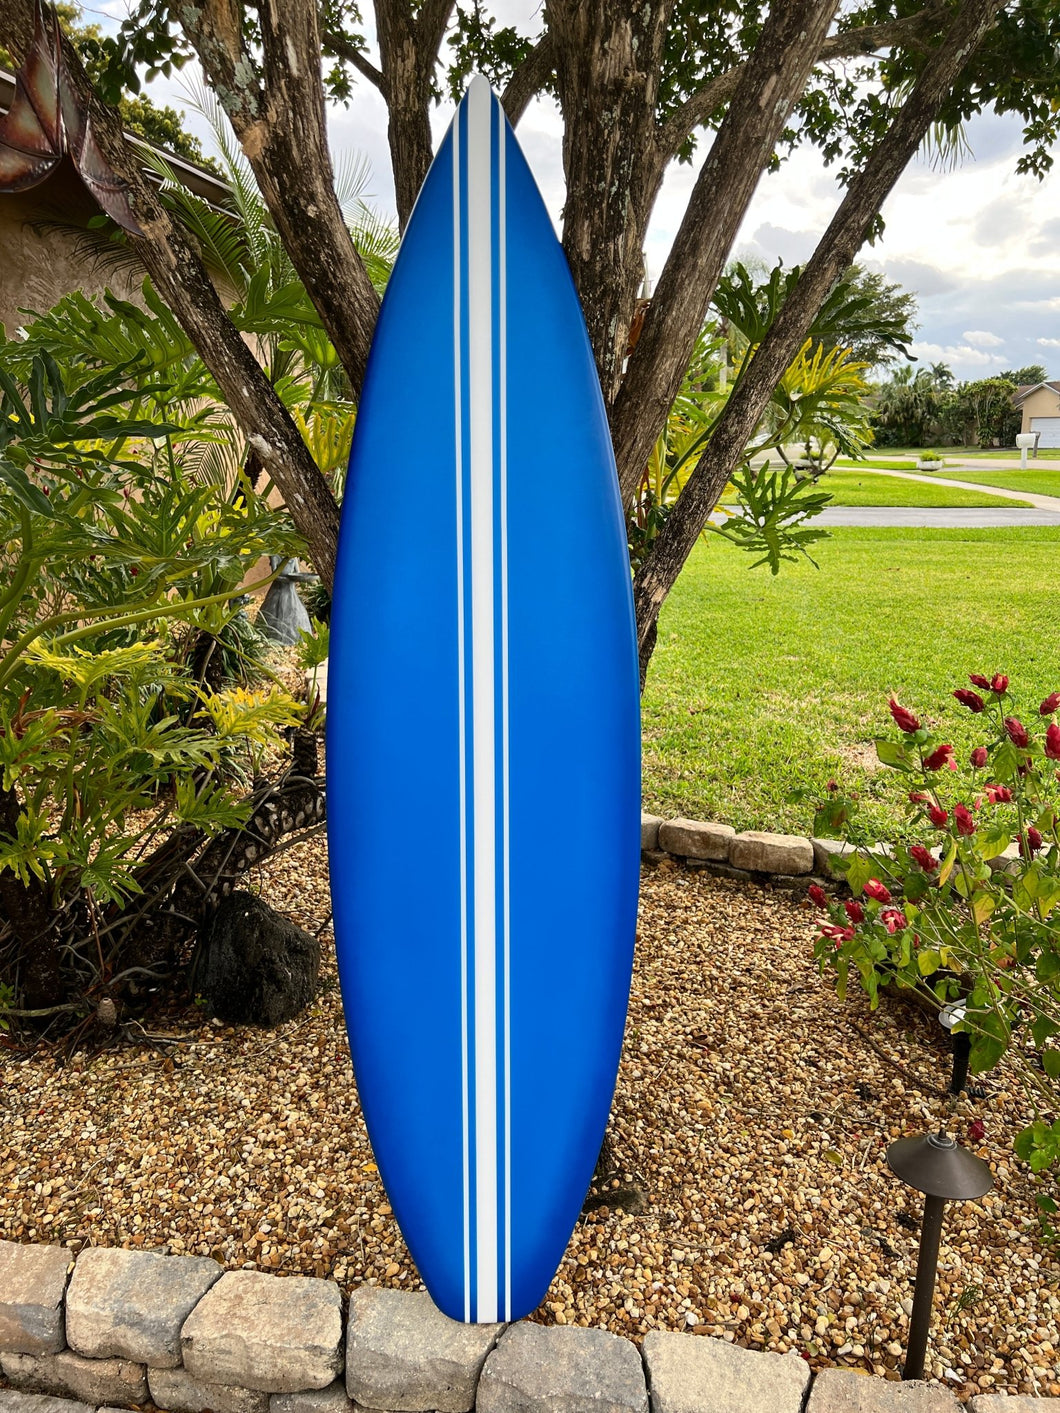 Killer custom - TIKI SOUL Surfboards - Surf & Beach Decor